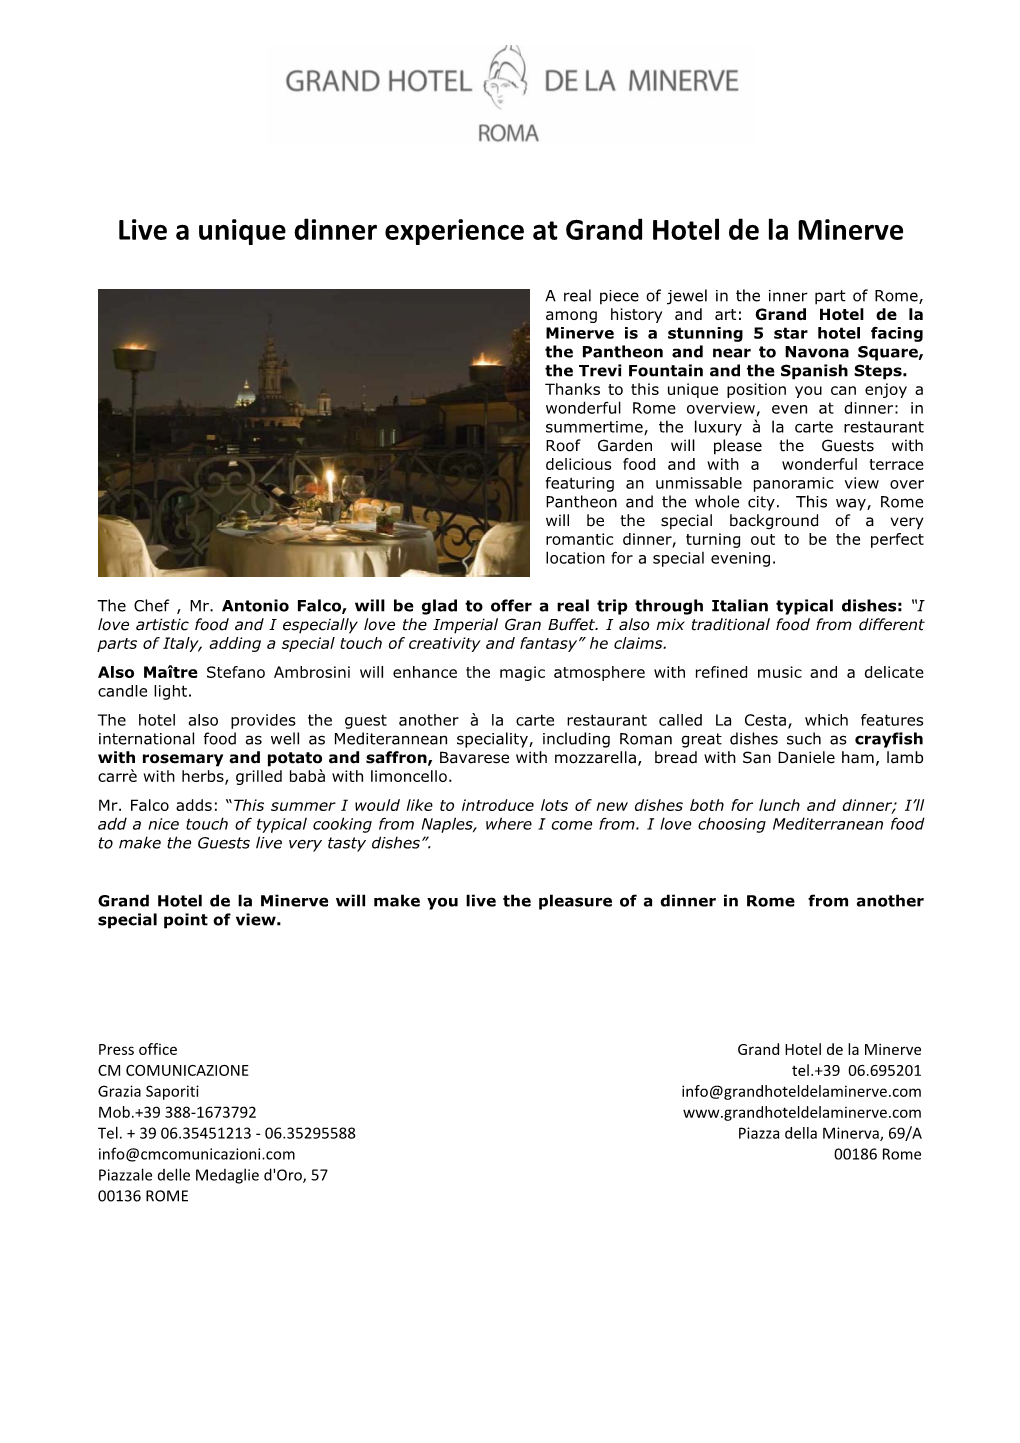 Live a Unique Dinner Experience at Grand Hotel De La Minerve